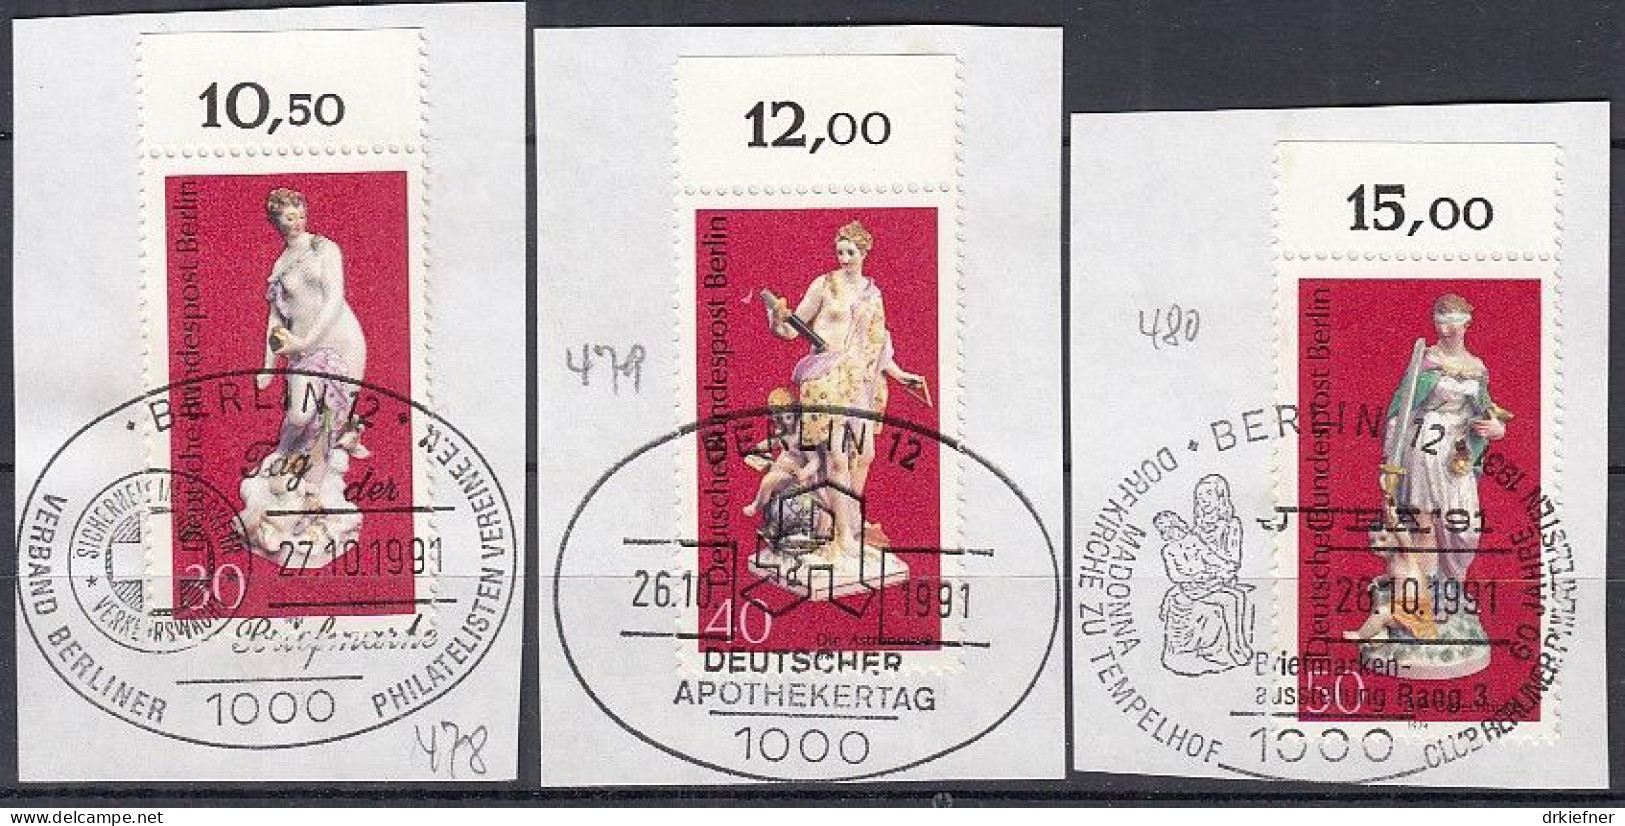 BERLIN  478-480, Gestempelt Auf Briefstück, SoSt., Berliner Porzellan, 1974 - Gebraucht